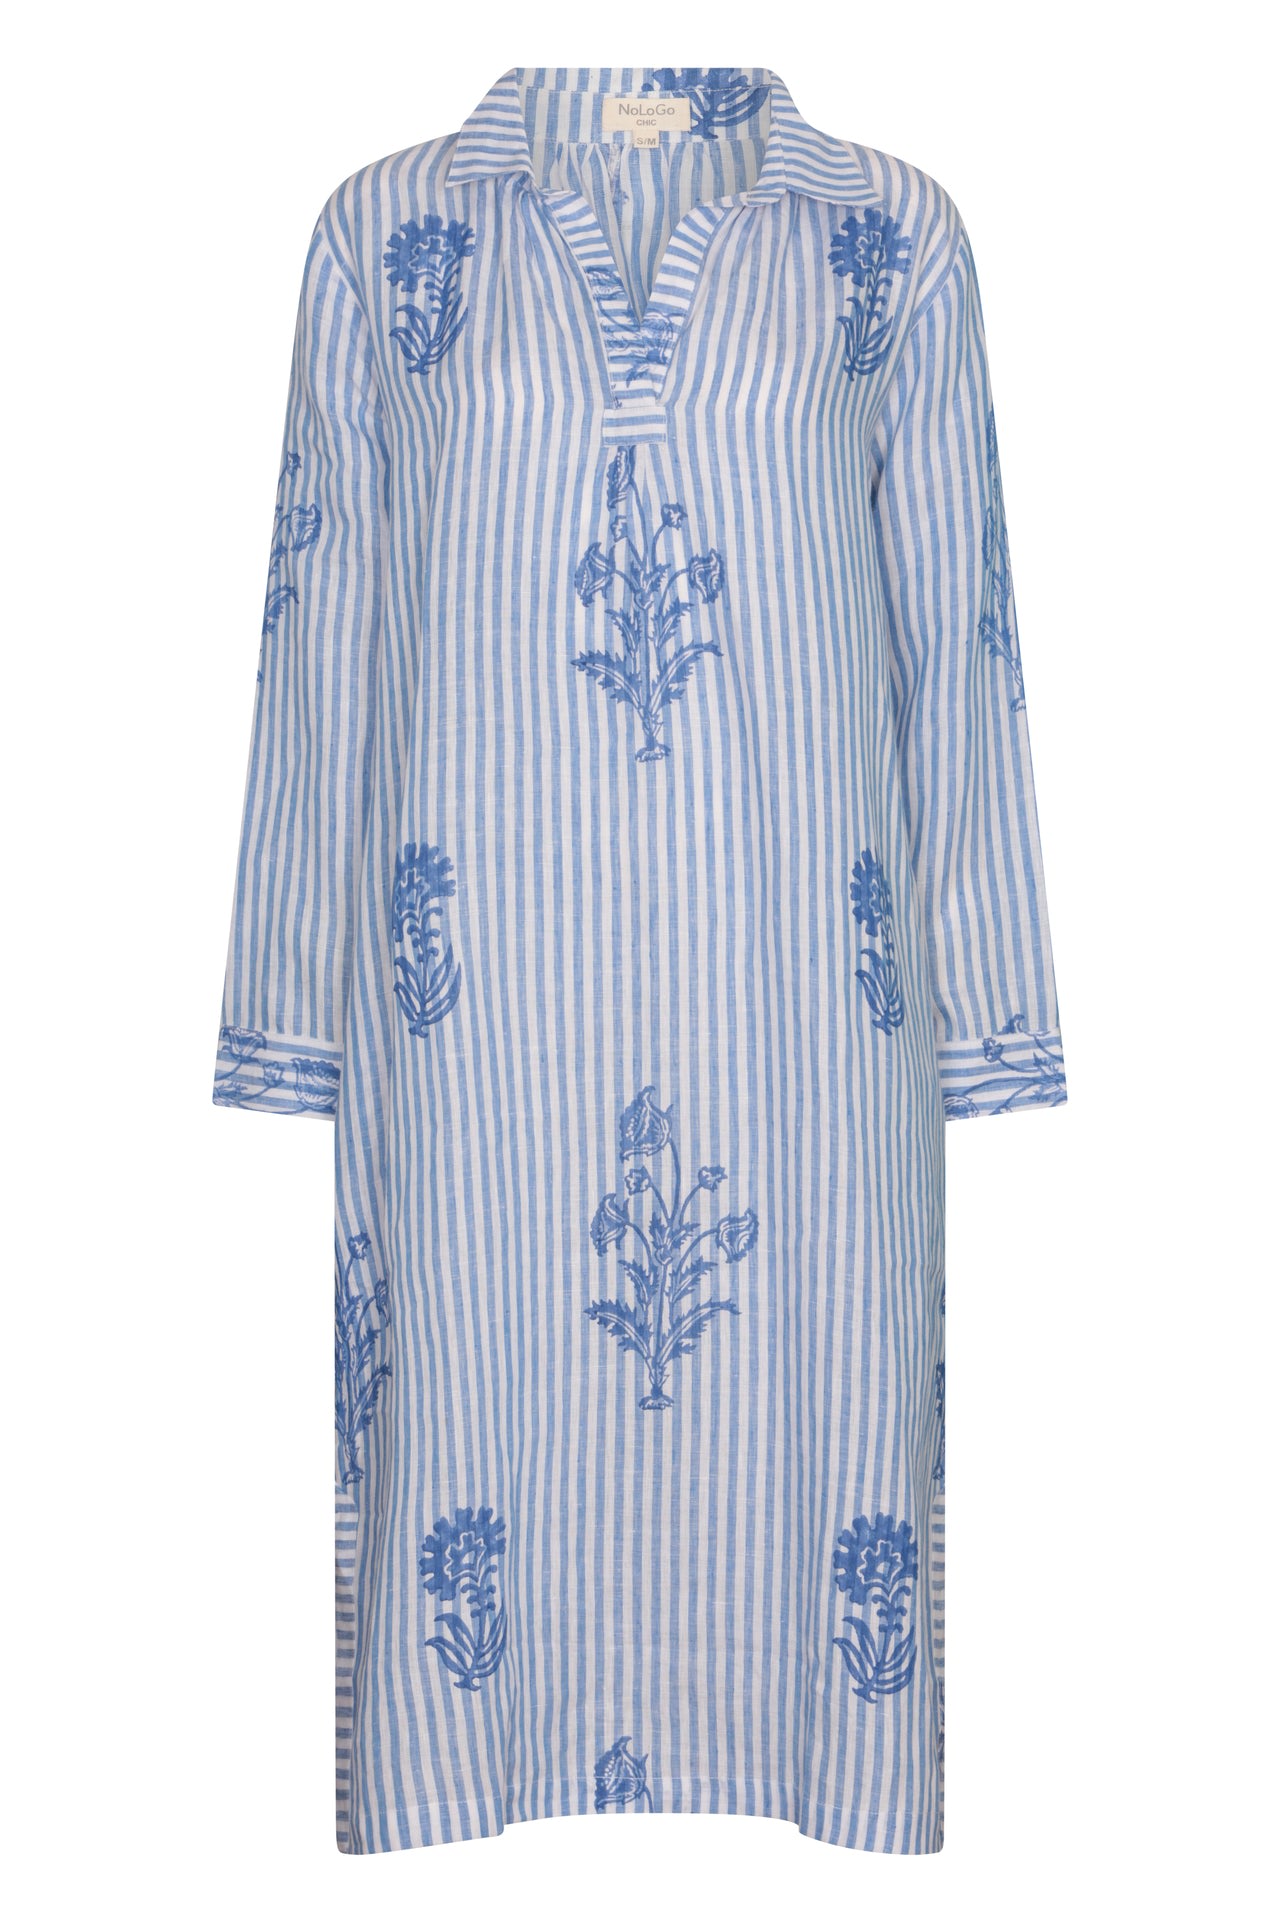 Women’s Tourist Hand Printed Stripe Linen Tunic Dress - Blue And White Small Nologo-Chic